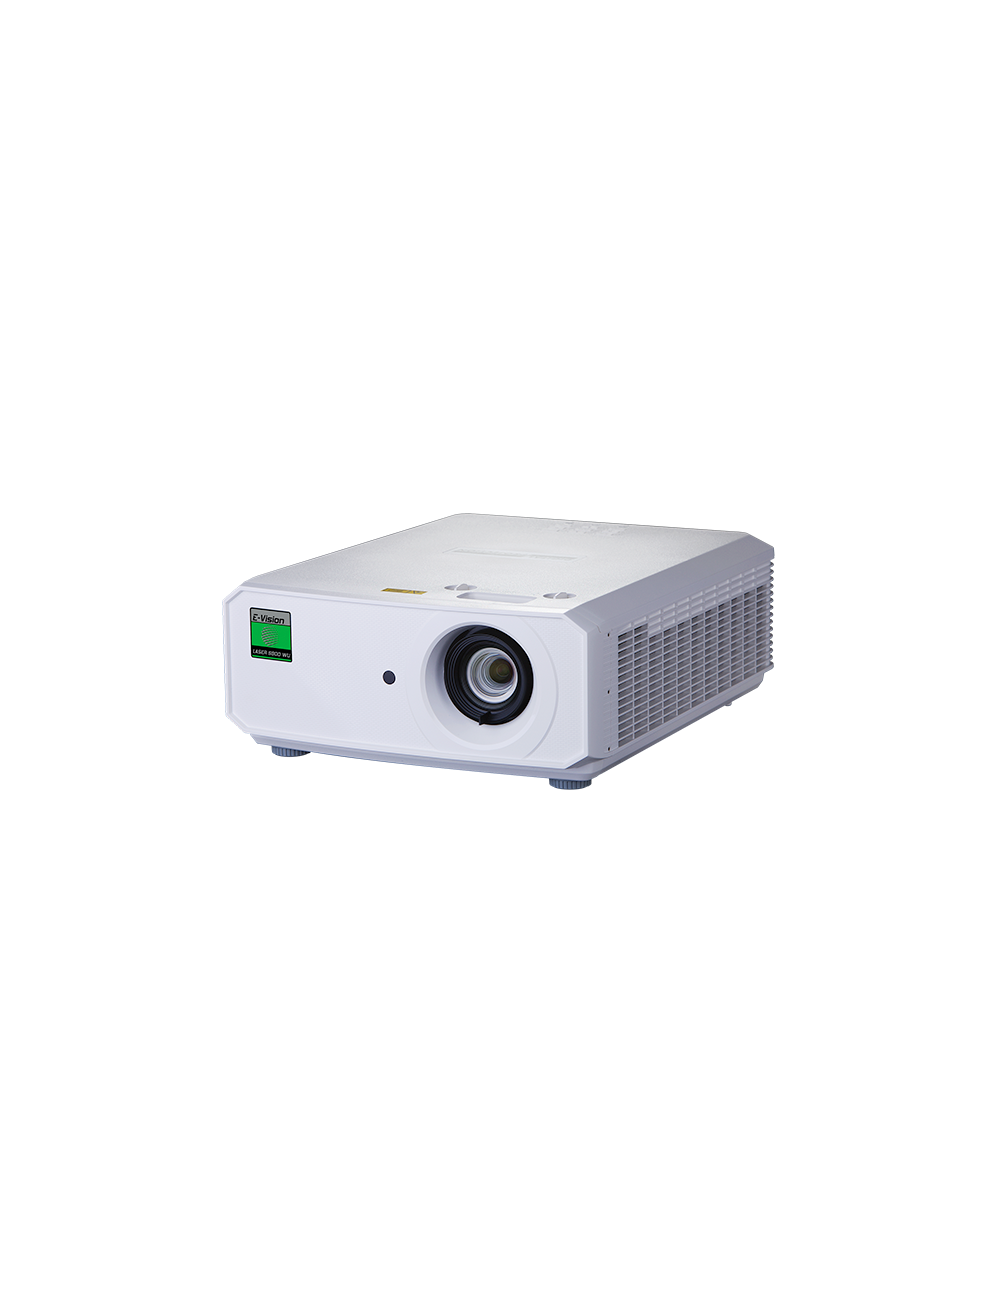 E-Vision Laser 5900 WUXGA, with 1.15-1.90:1 zoom lens (fixed)